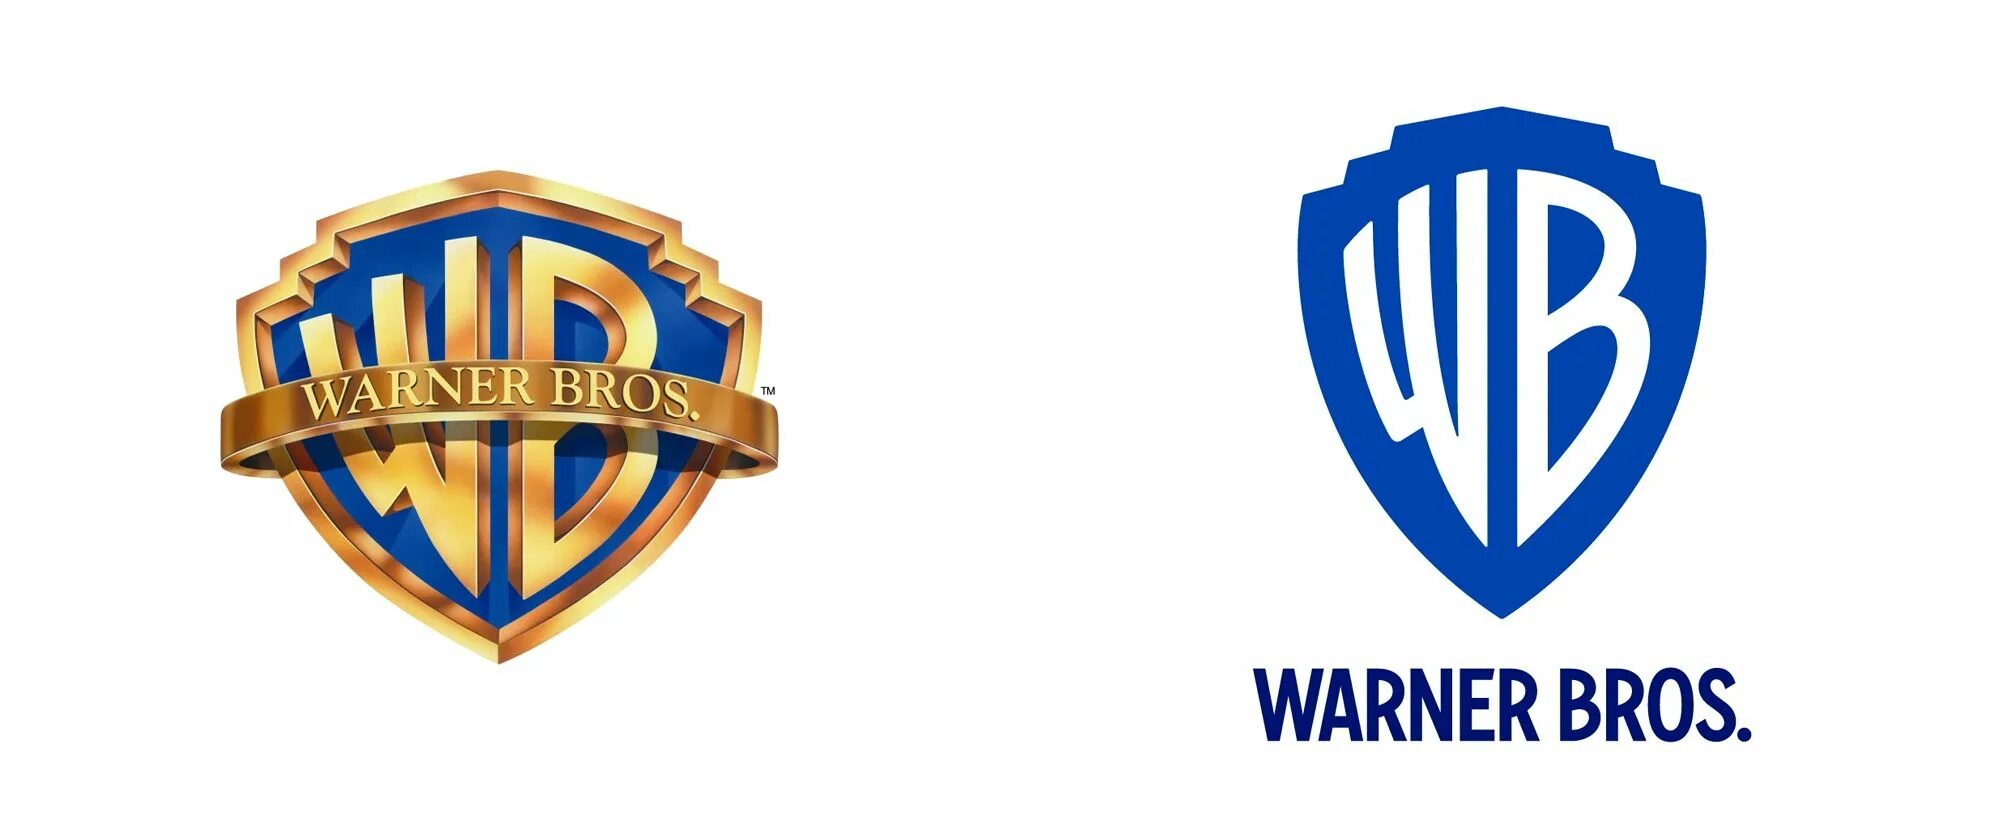 Ворнер БРОС. WB логотип. Логотип ворнер бразерс. Кинокомпания Warner Bros. Варнер фф